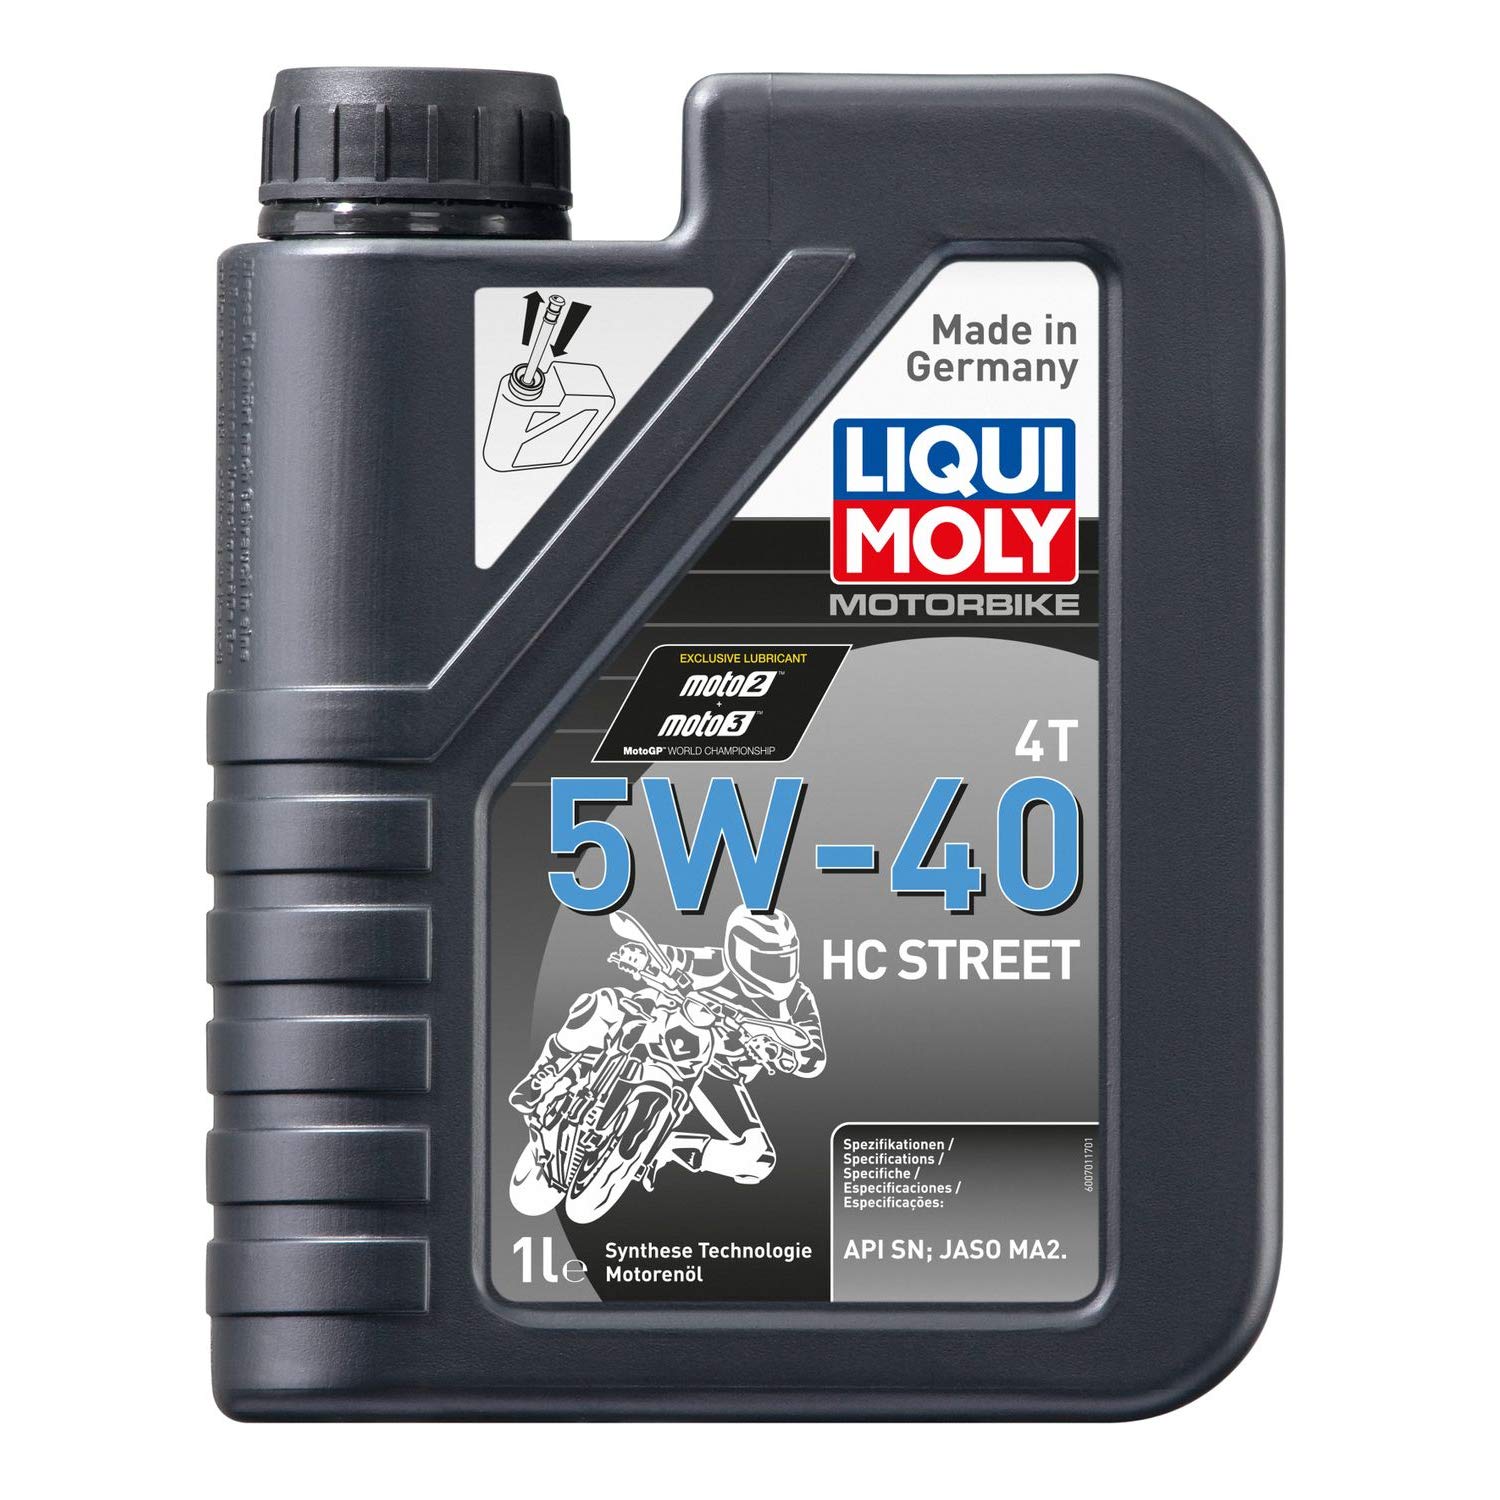 LIQUI MOLY Motorbike 4T 5W-40 HC Street | 1 L | Motorrad Synthesetechnologie Motoröl | Art.-Nr.: 20750 von Liqui Moly